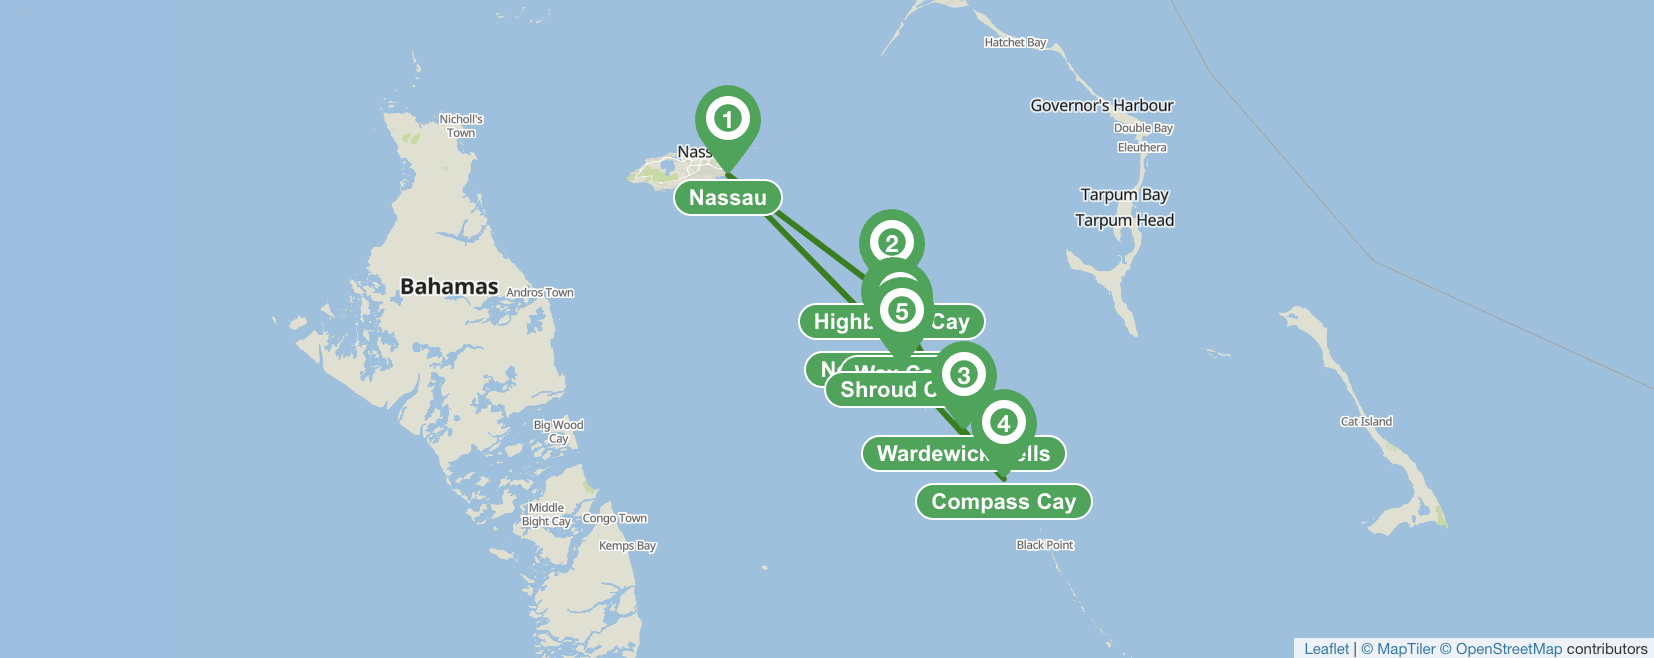 Nassau & Exuma 7 day sailing itinerary